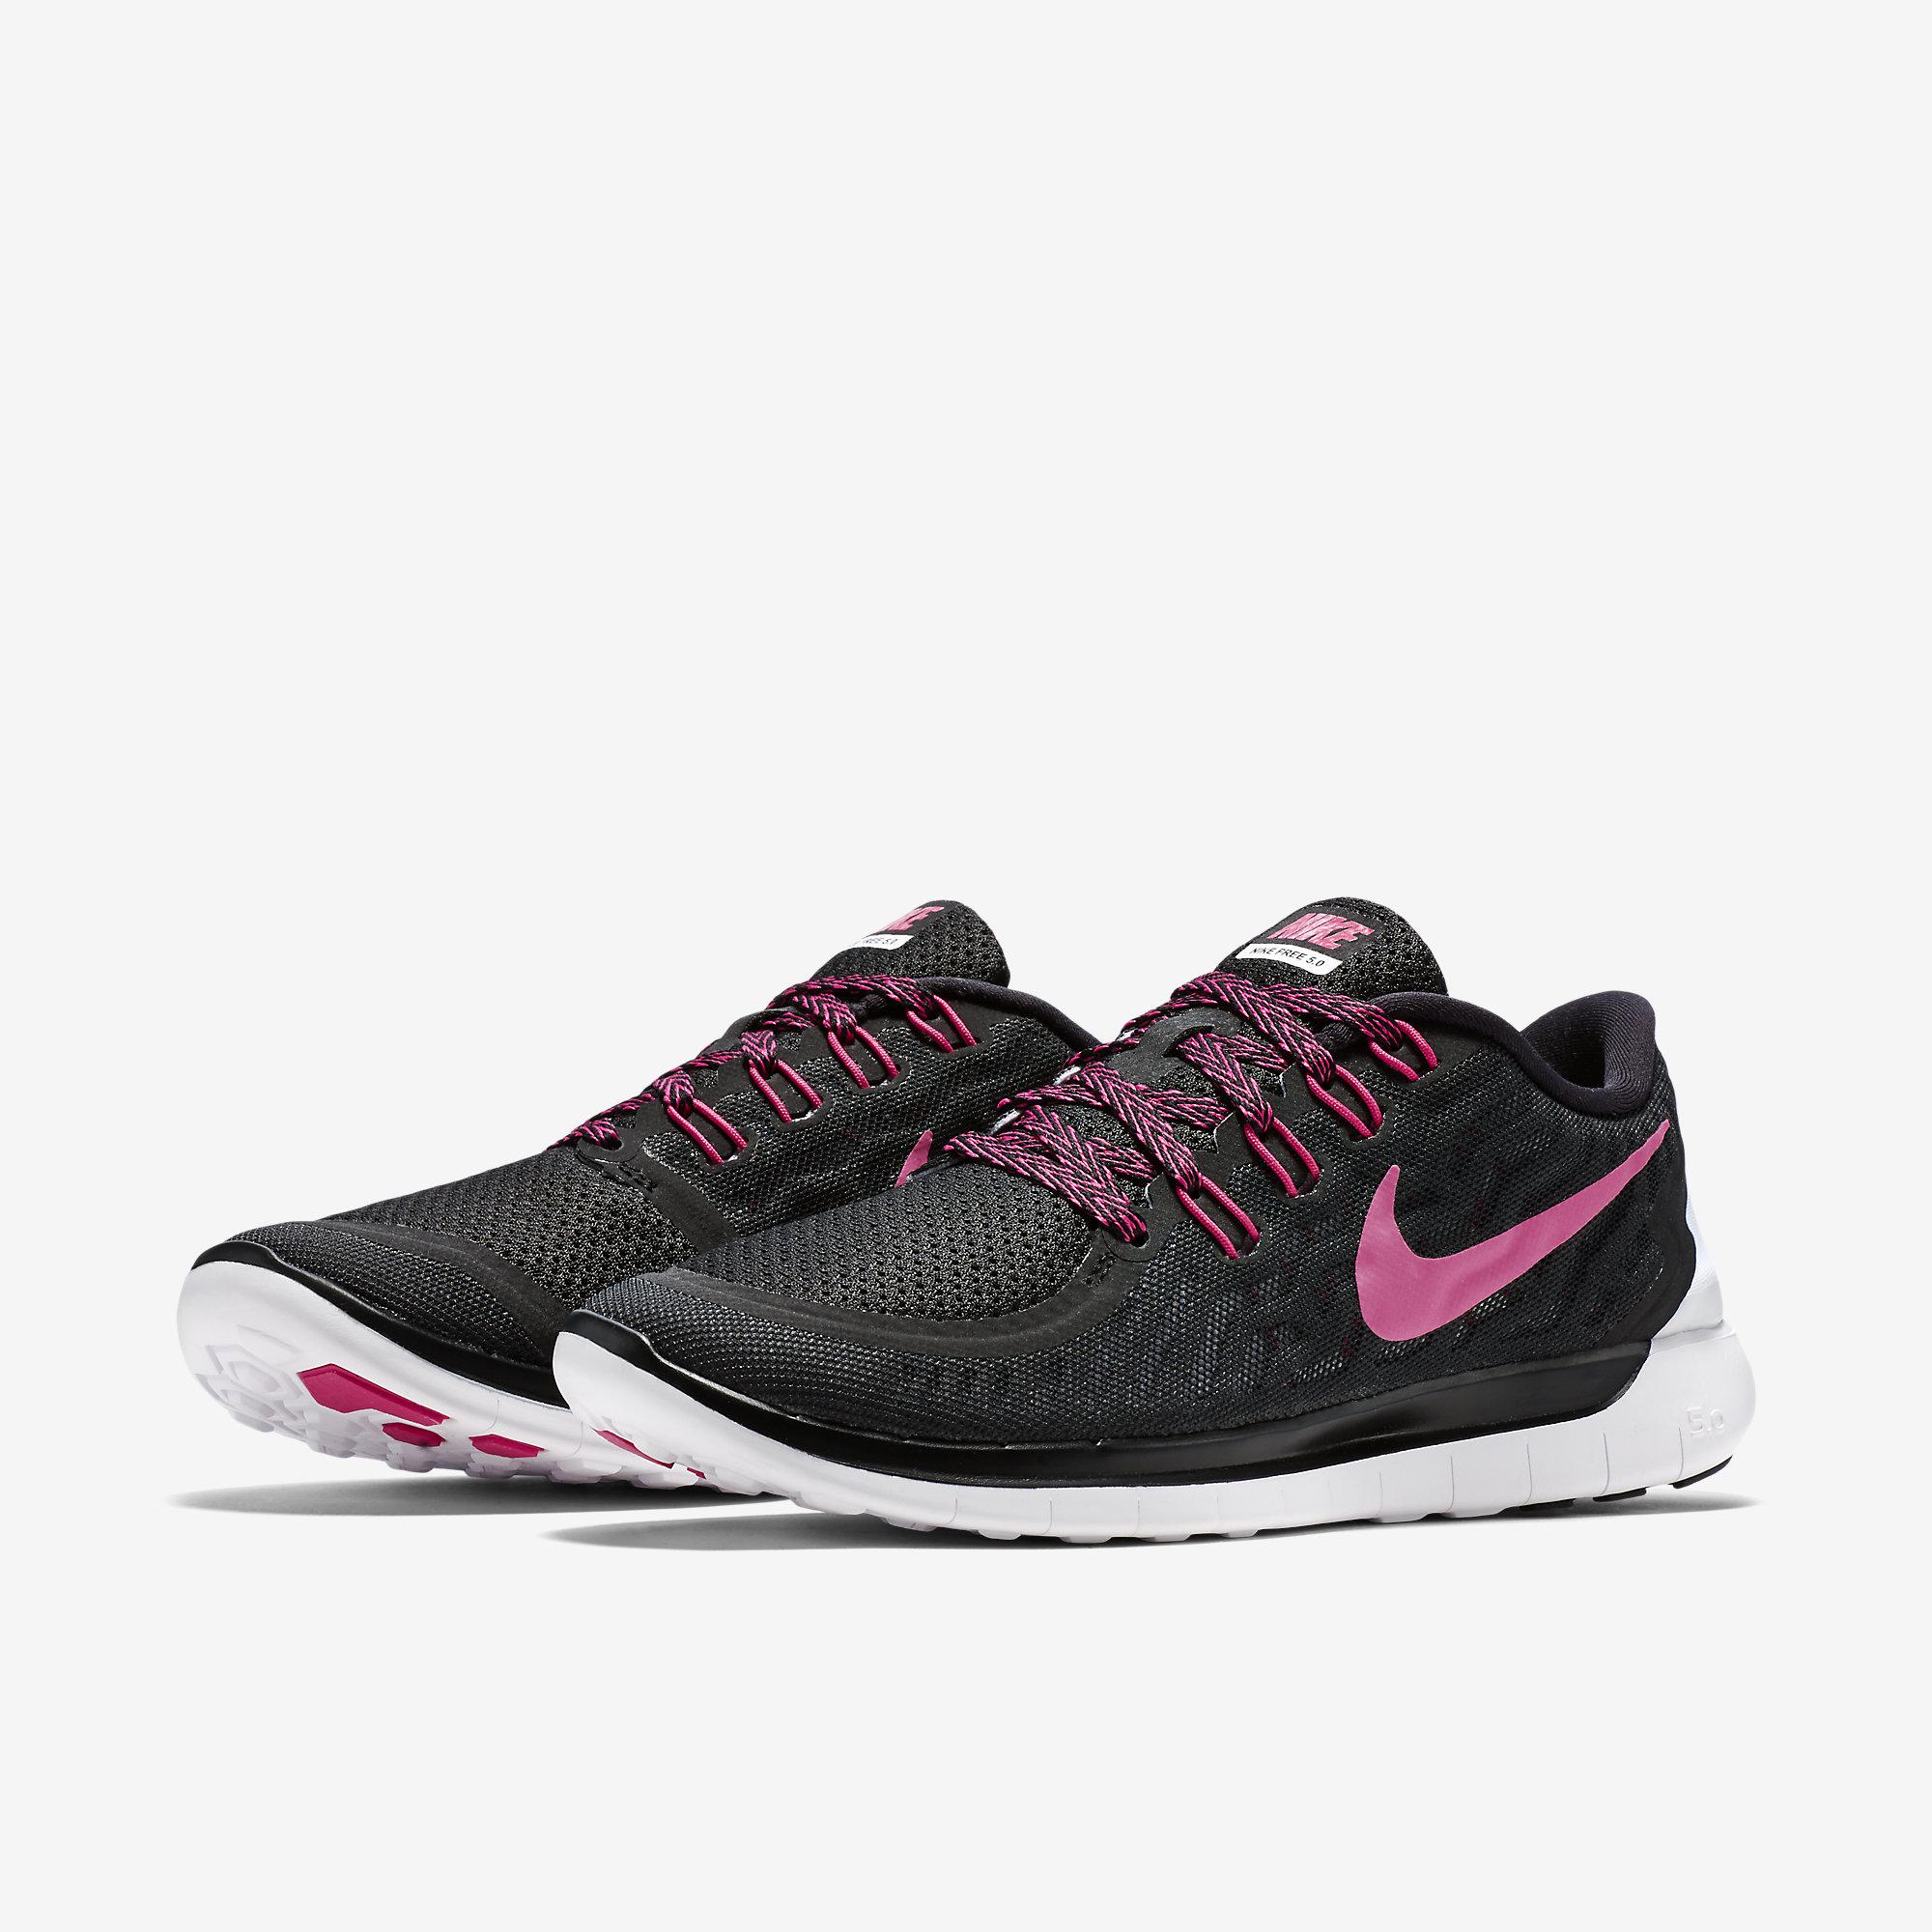 Nike Womens Free 5.0 Running Shoes - Black/Pink - Tennisnuts.com